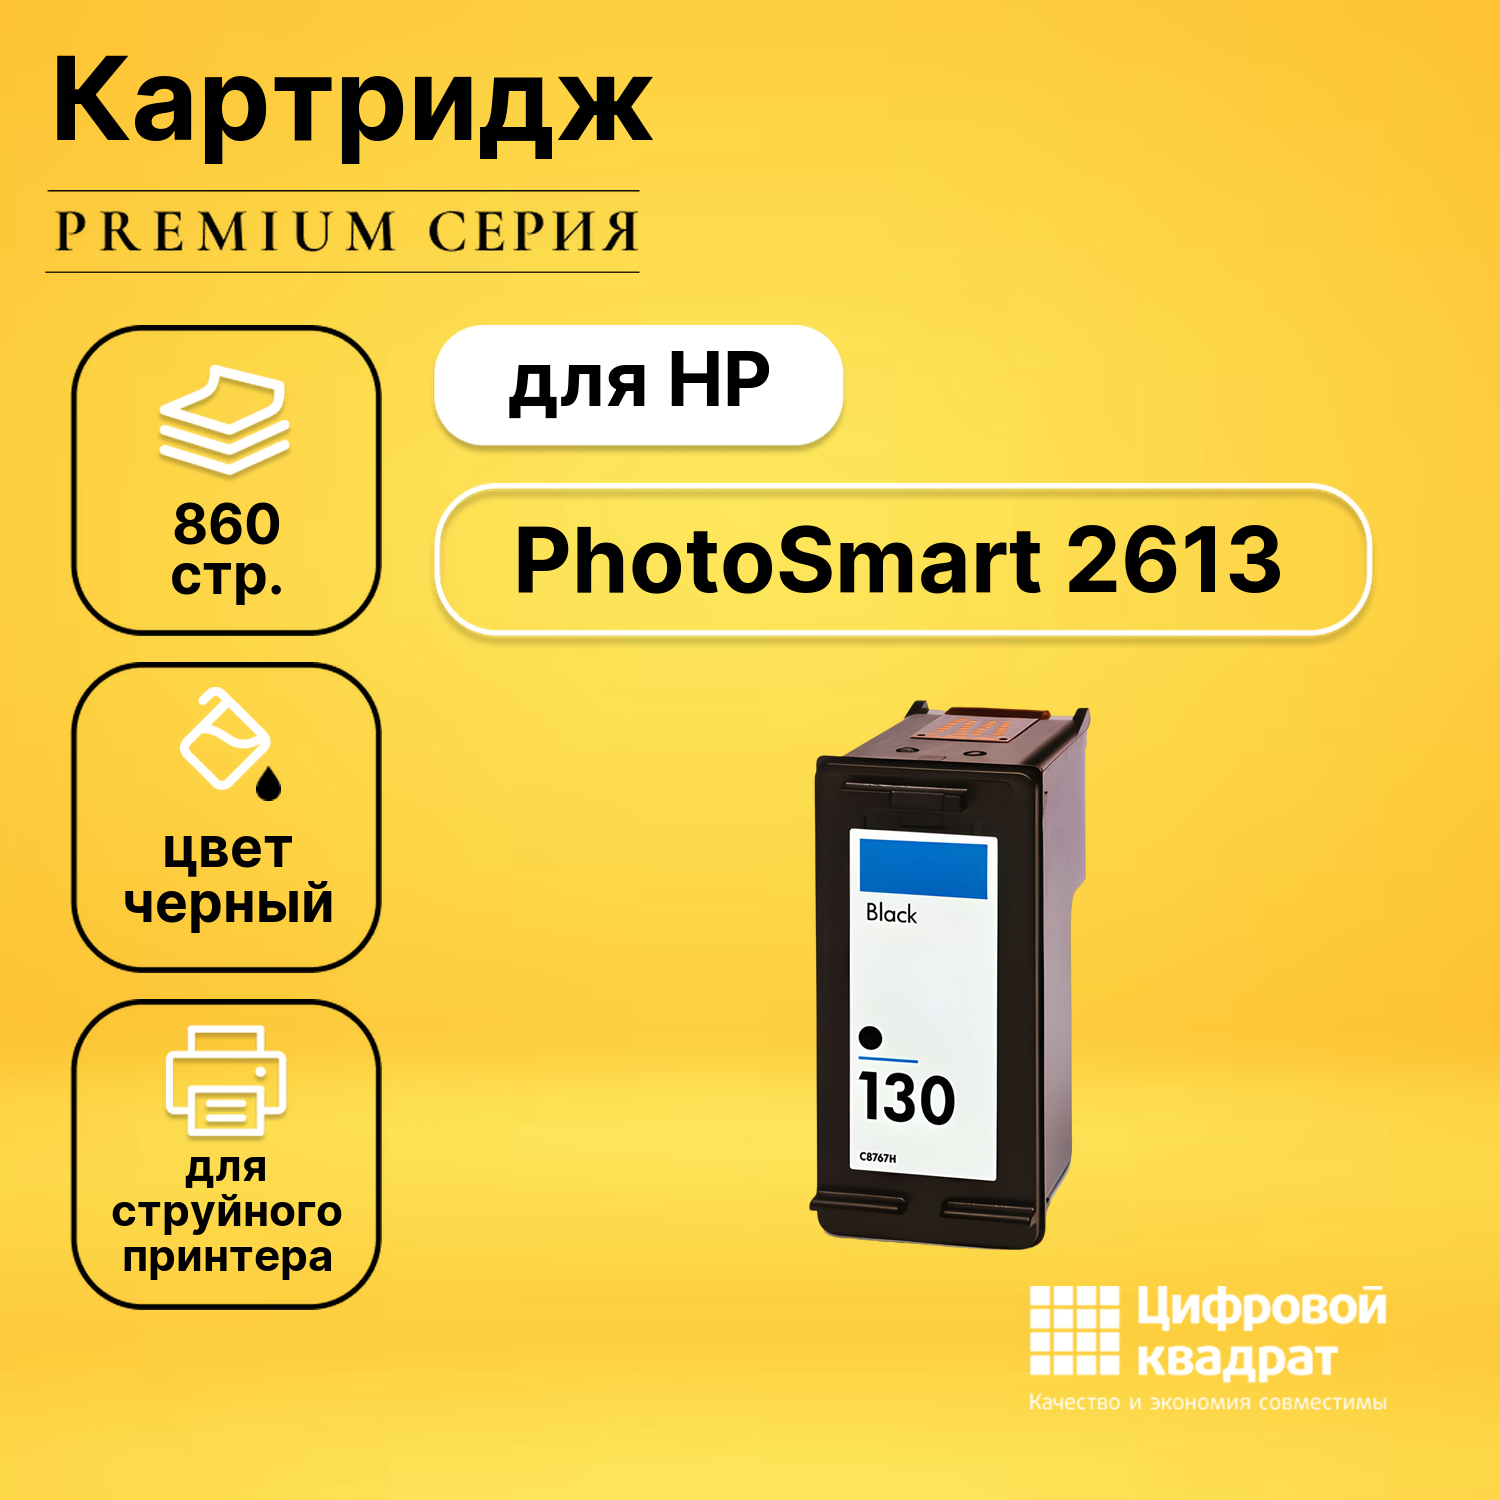 Картридж DS для HP PhotoSmart 2613 совместимый